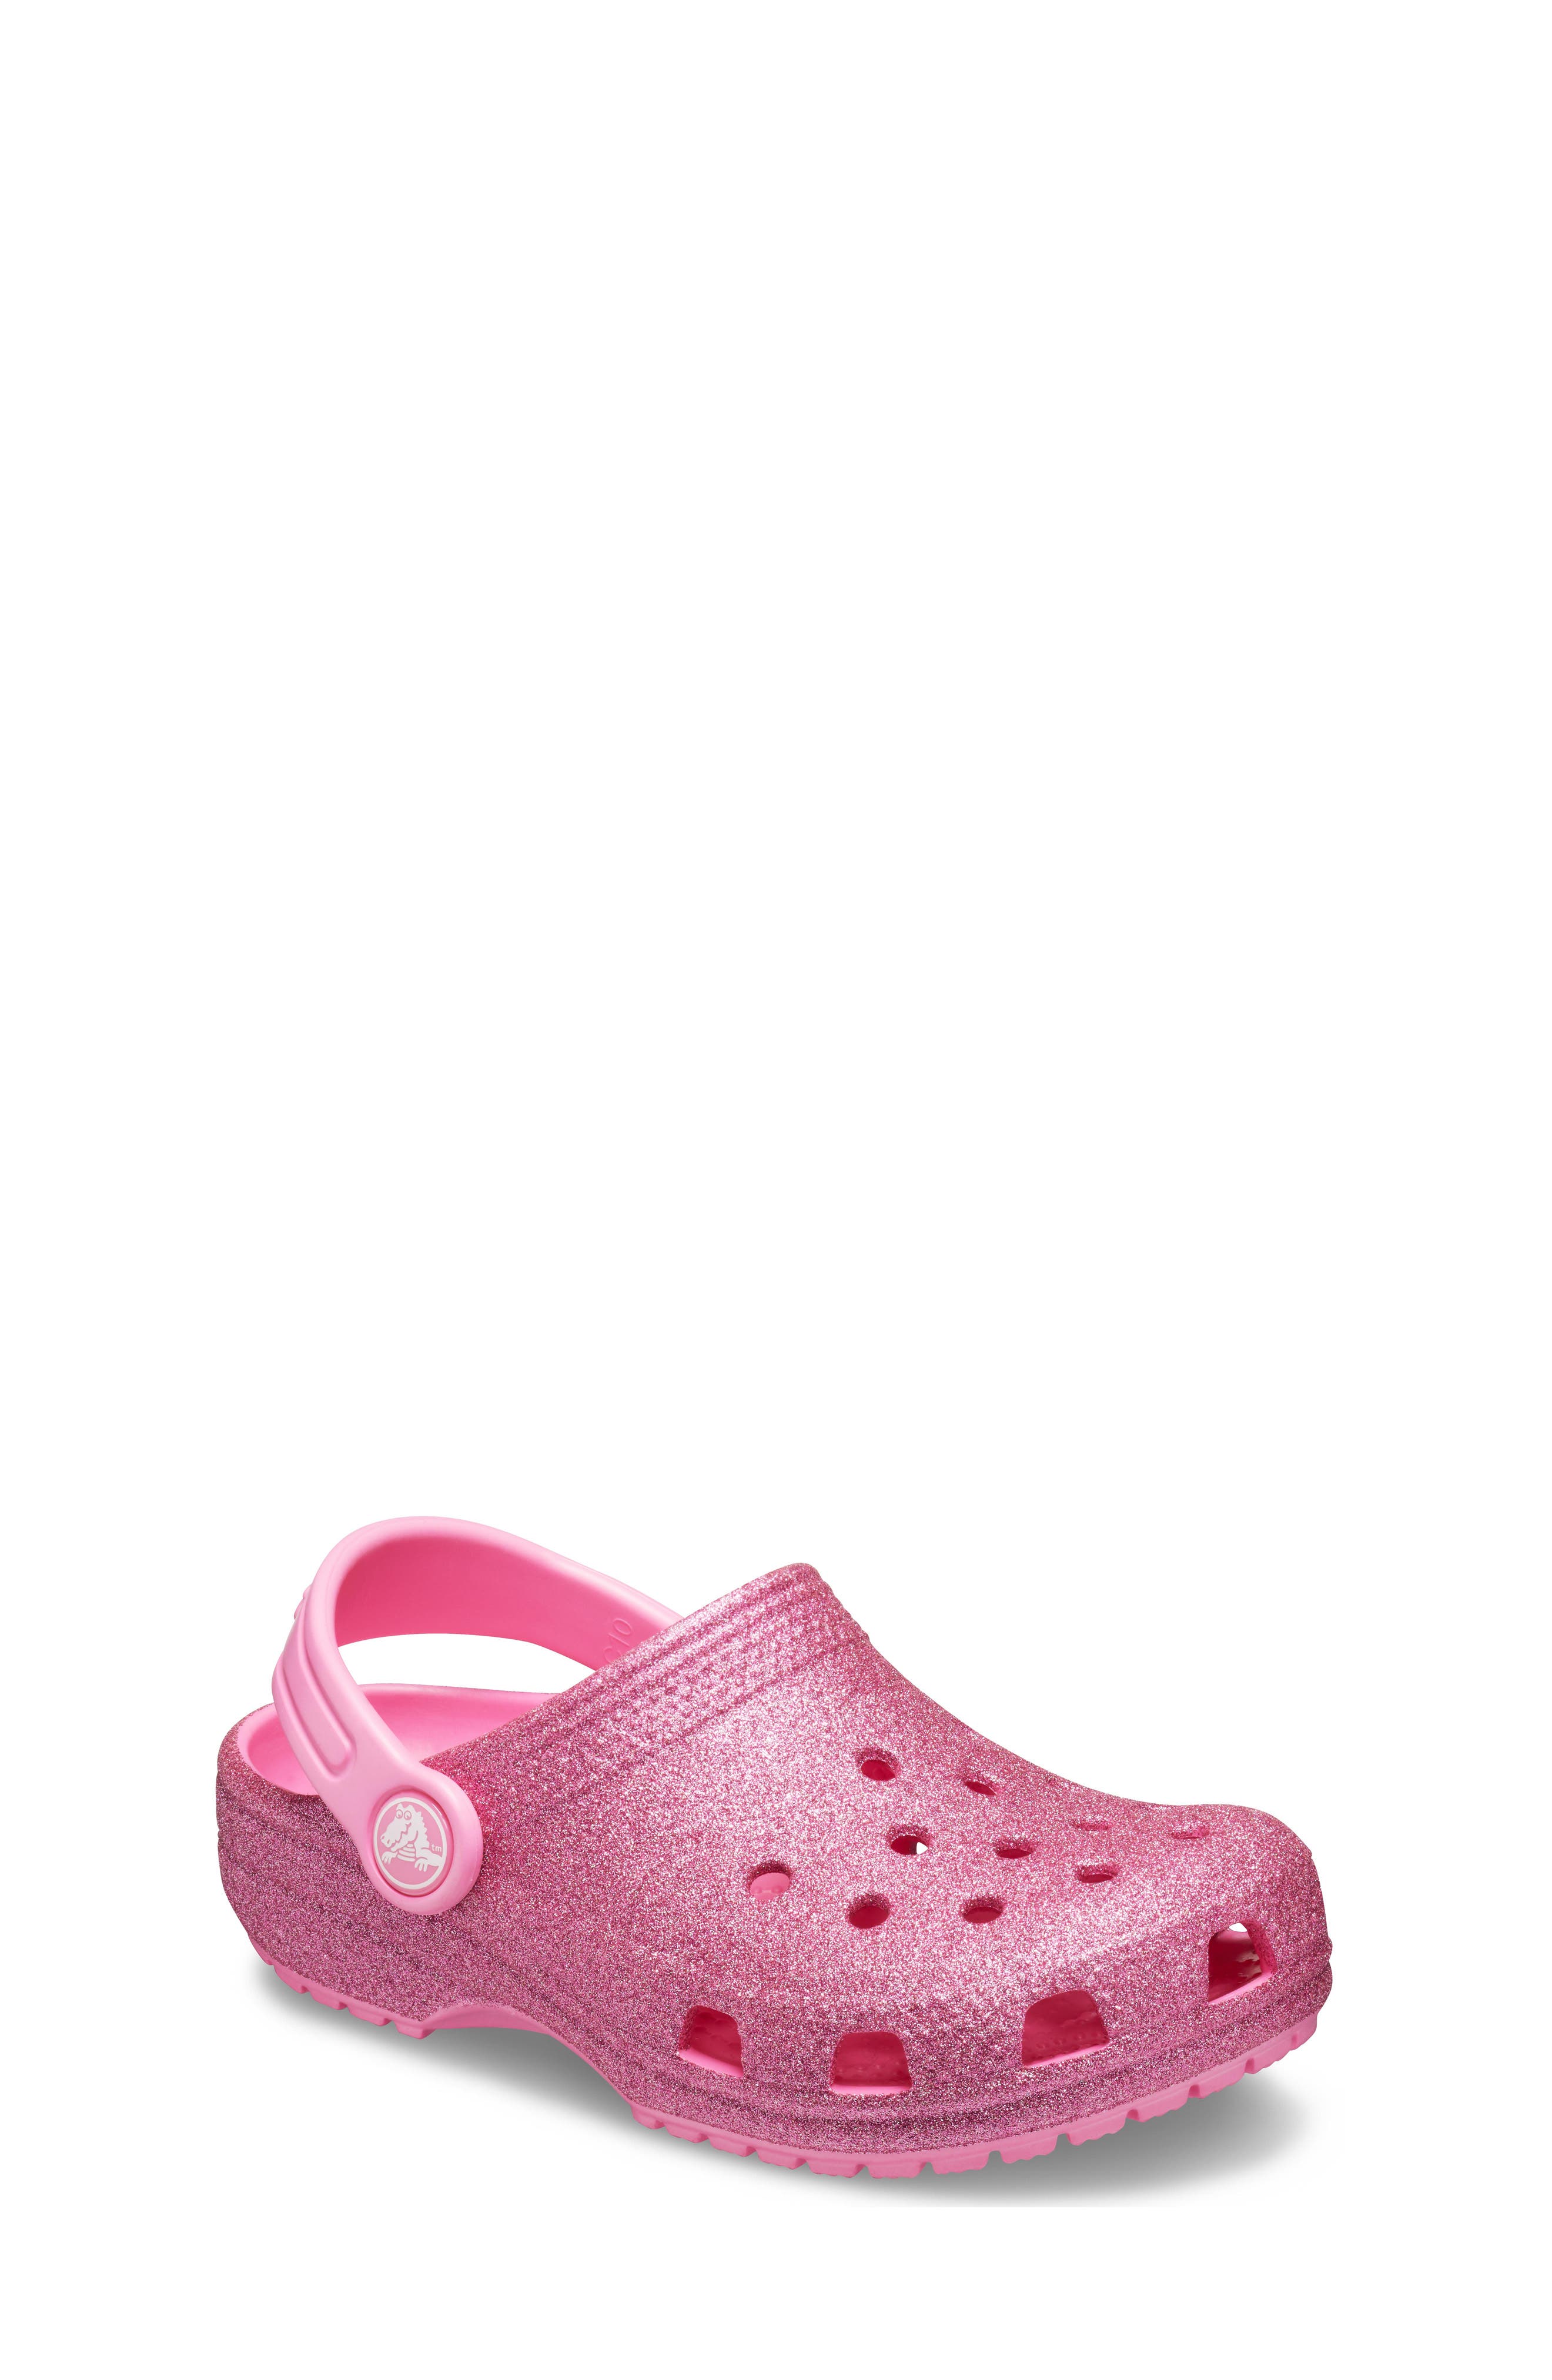 crocs pink glitter